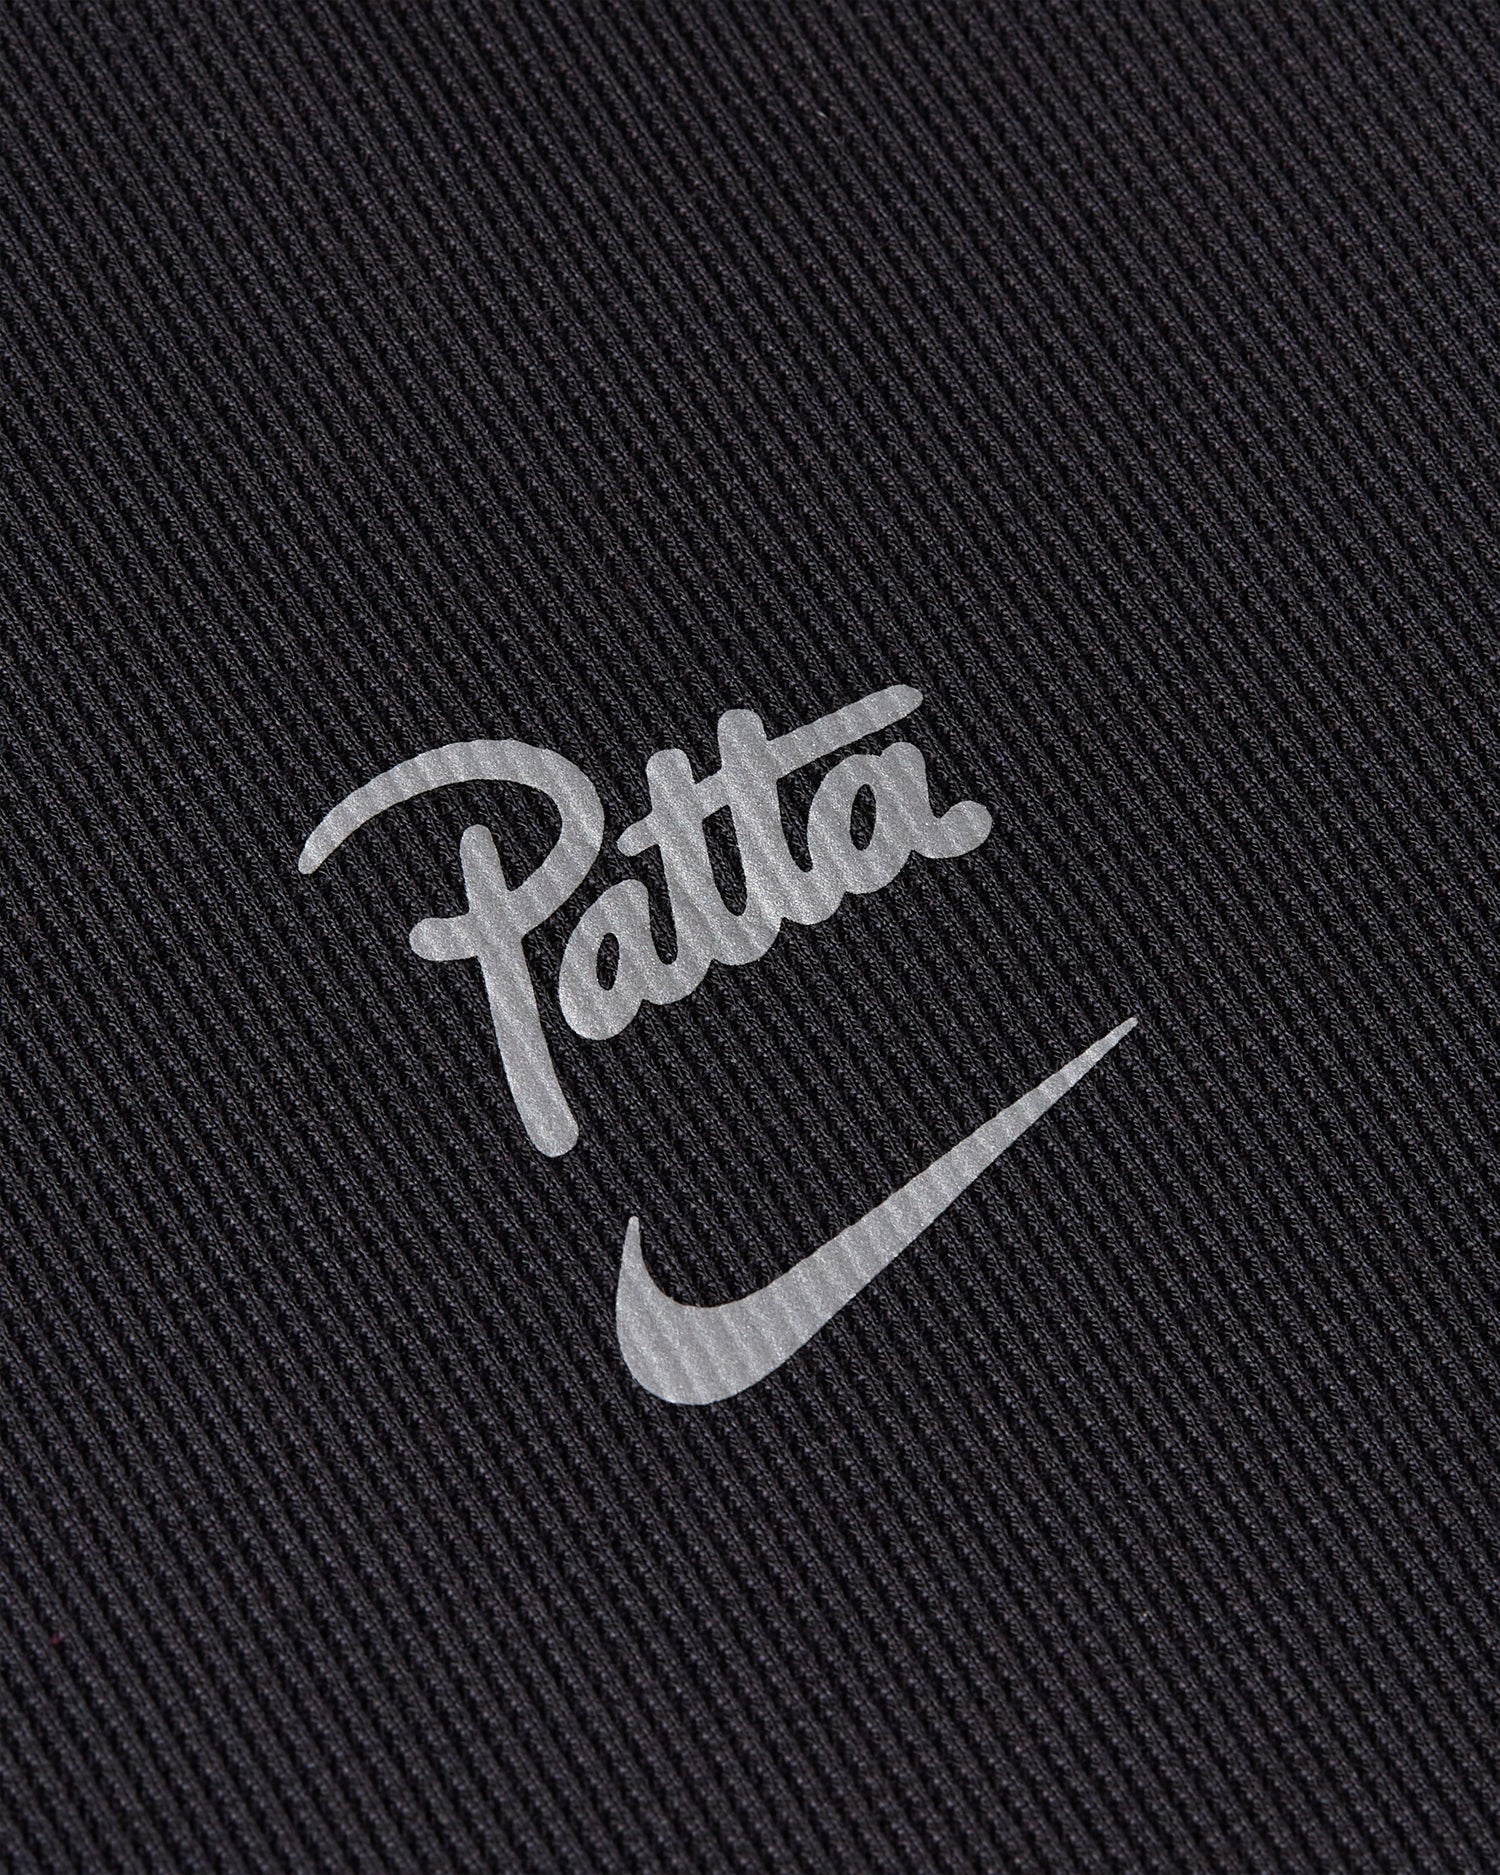 Nike x Patta Running Team T-shirt (Black)